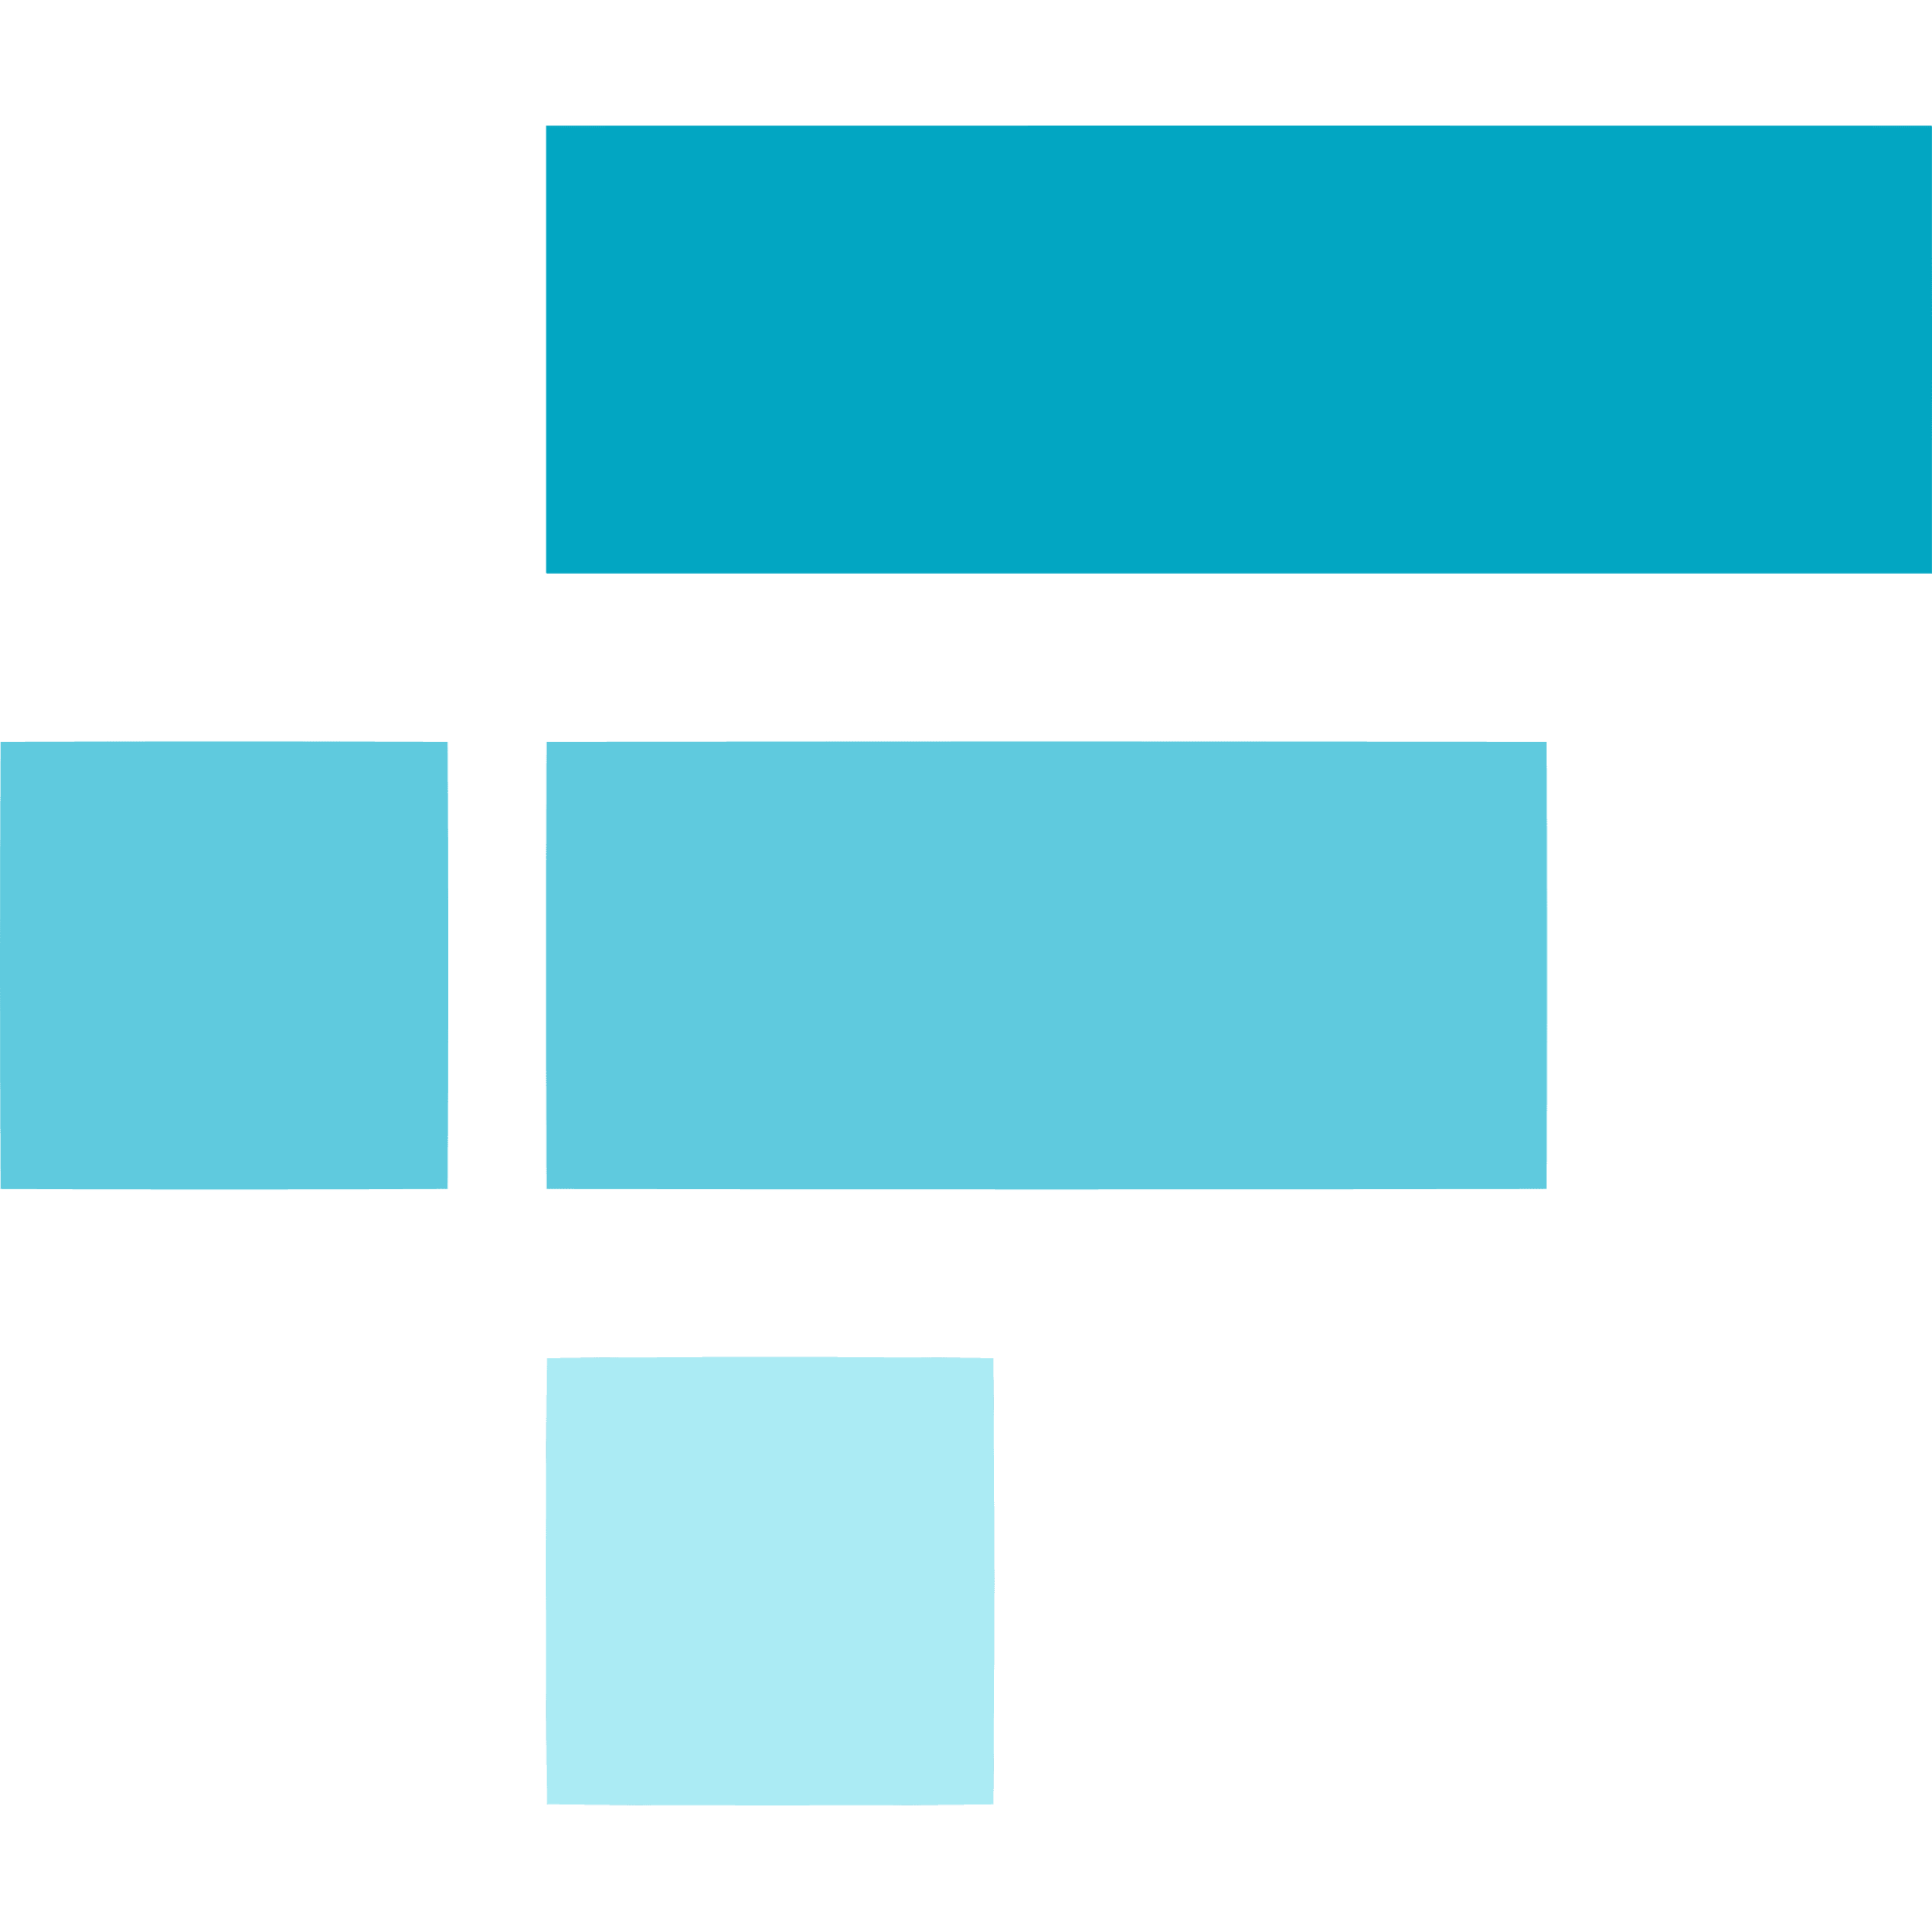 FTX Token logo in png format